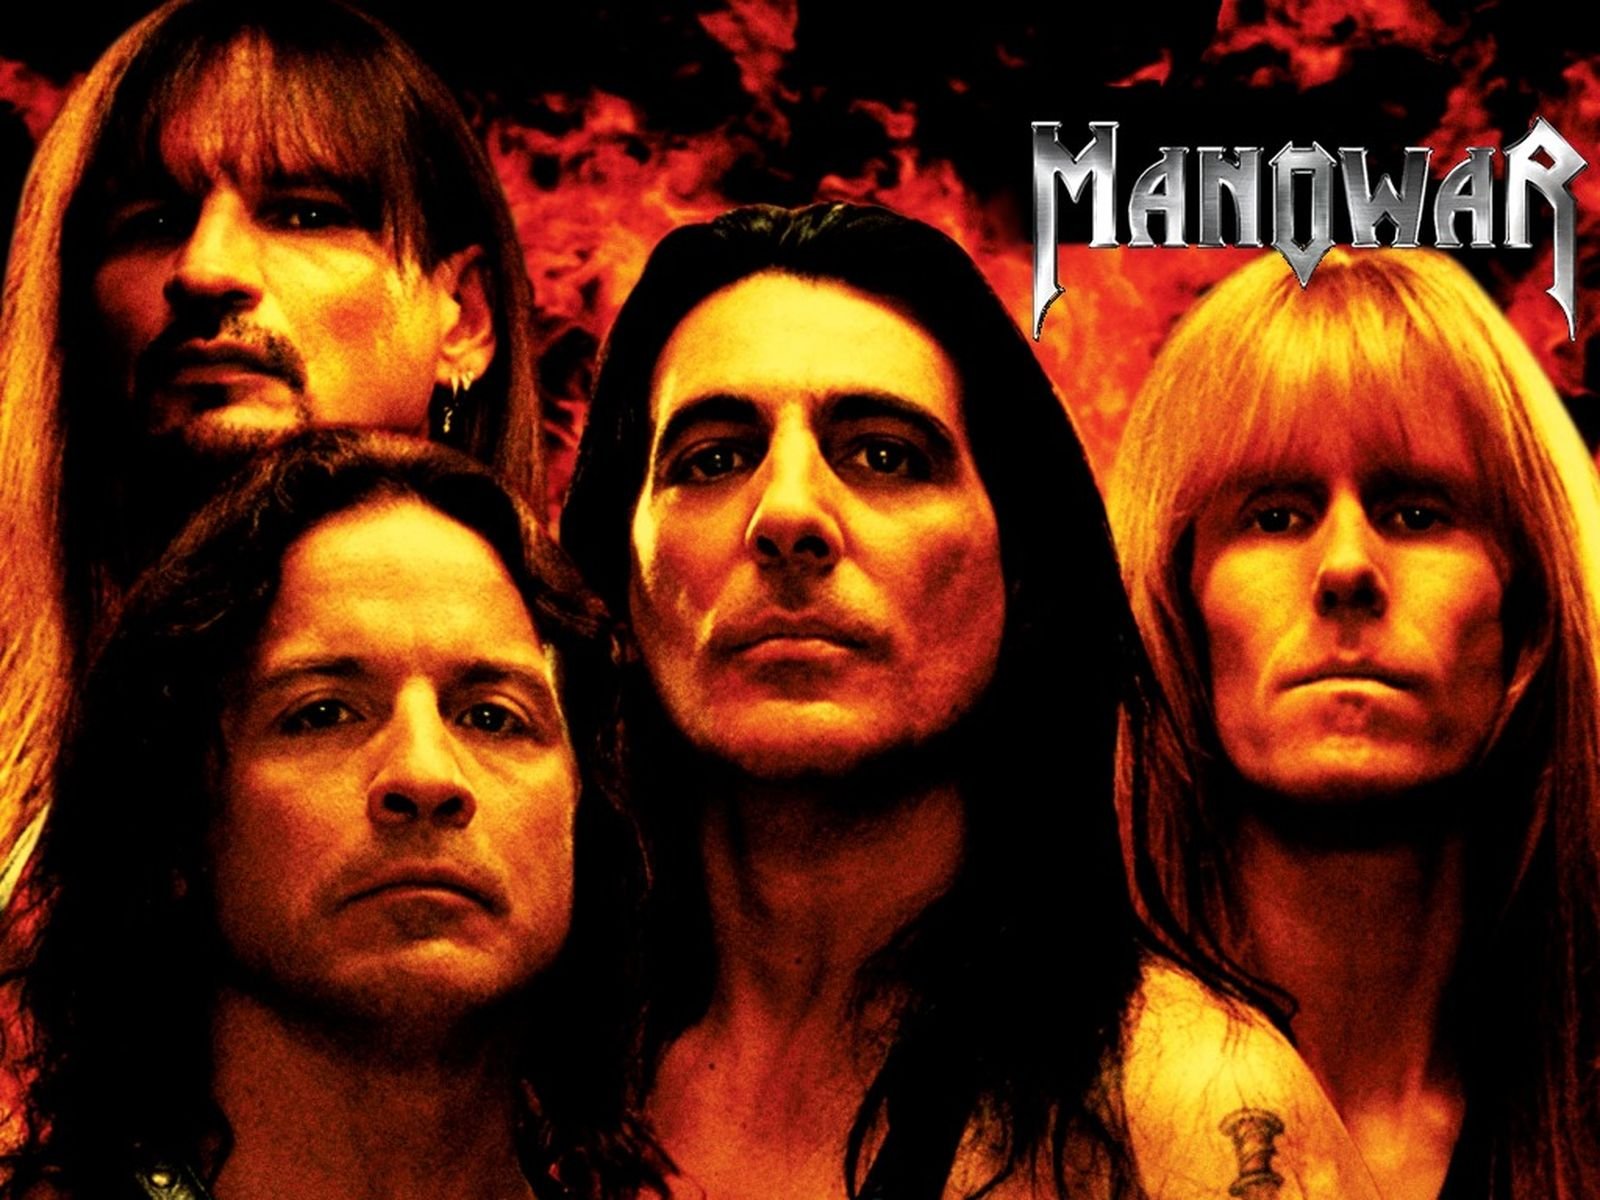 Manowar mp3. Manowar Band. Manowar фото группы. Группа Manowar 2023. Группа Manowar иллюстрации.